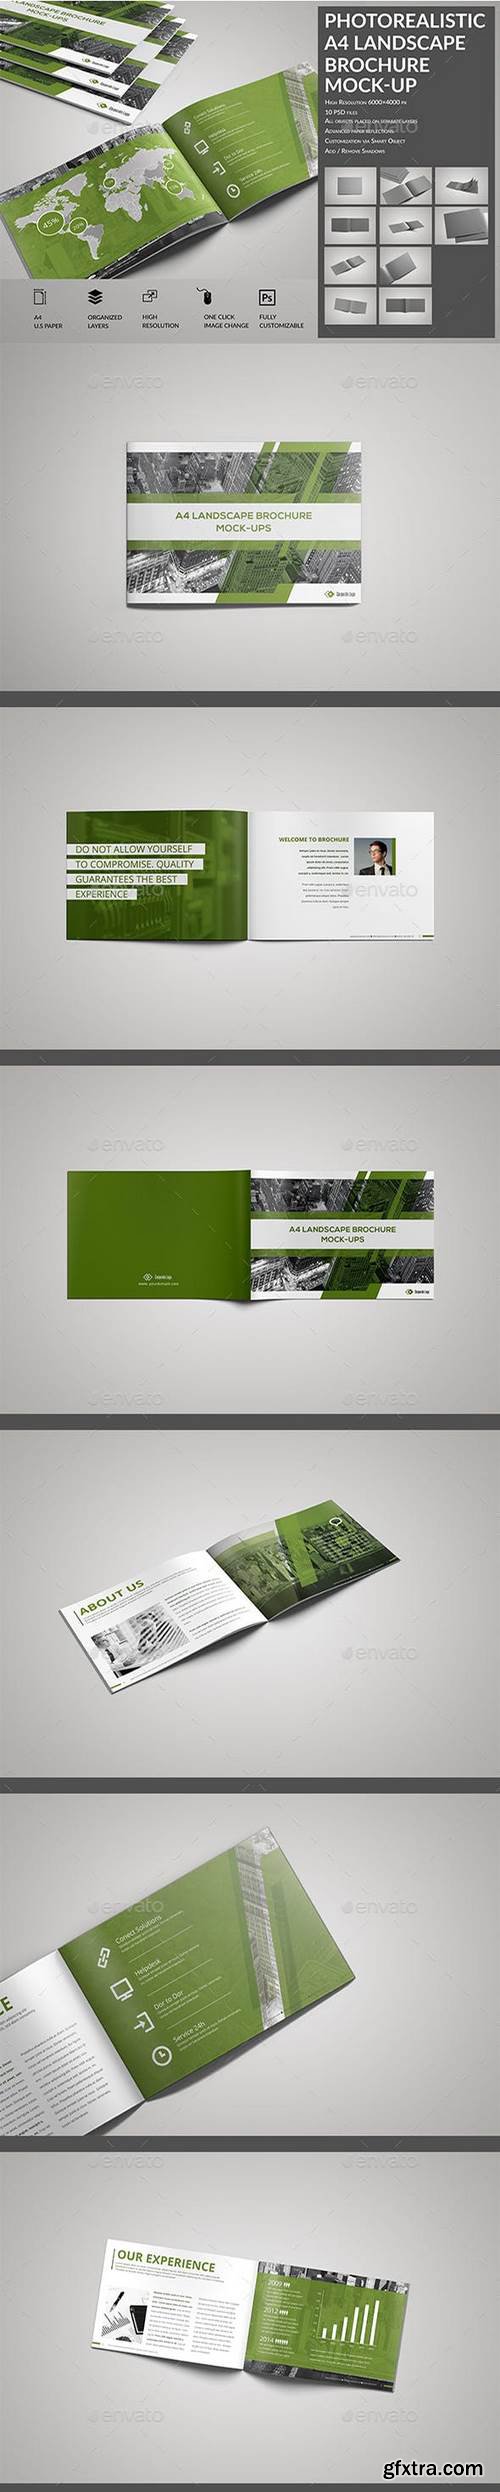 Graphicriver - Photorealistic A4 Landscape Brochure / Catalog Mock-Up 16501817